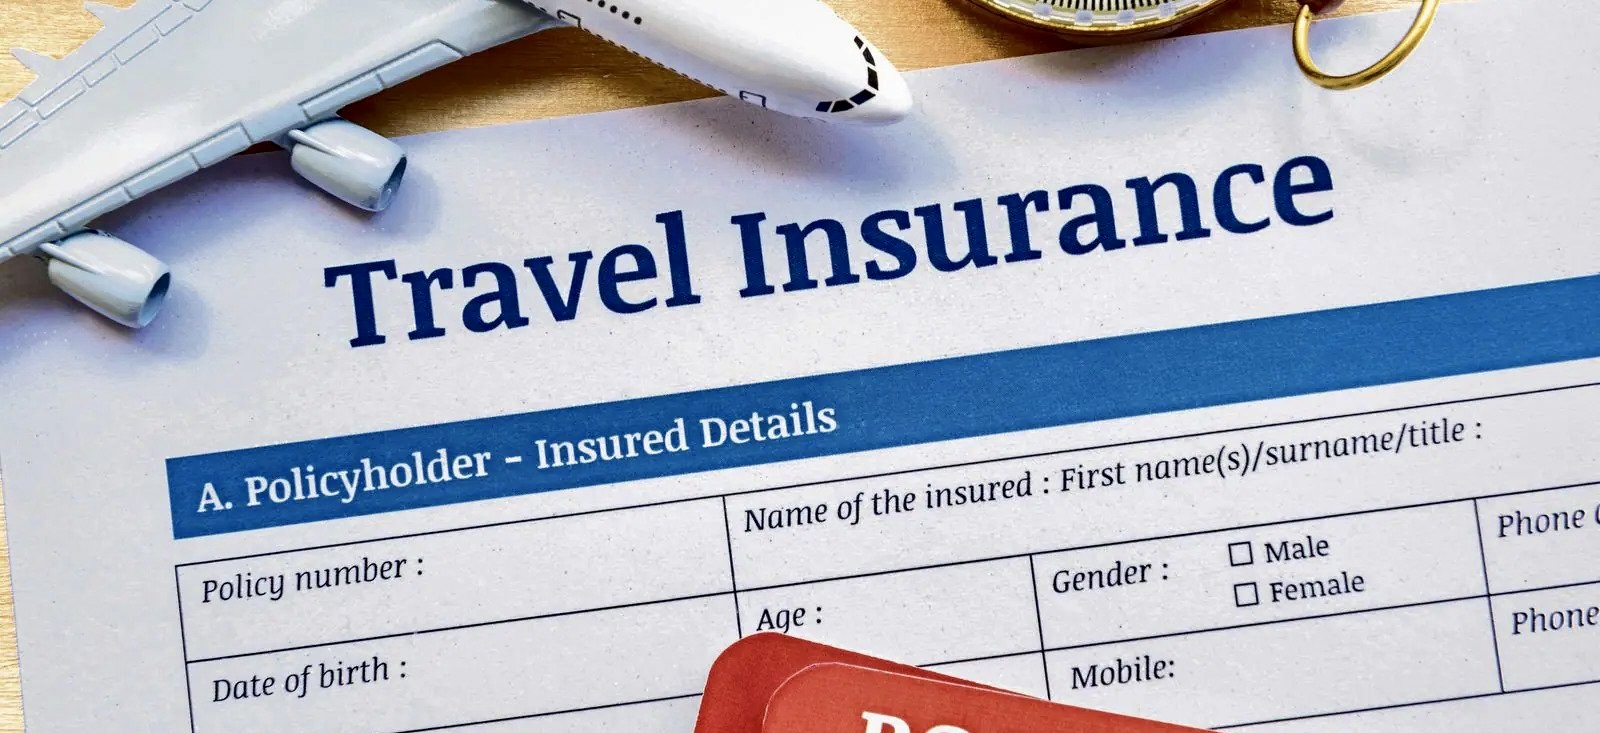 bhutan travel insurance requirements